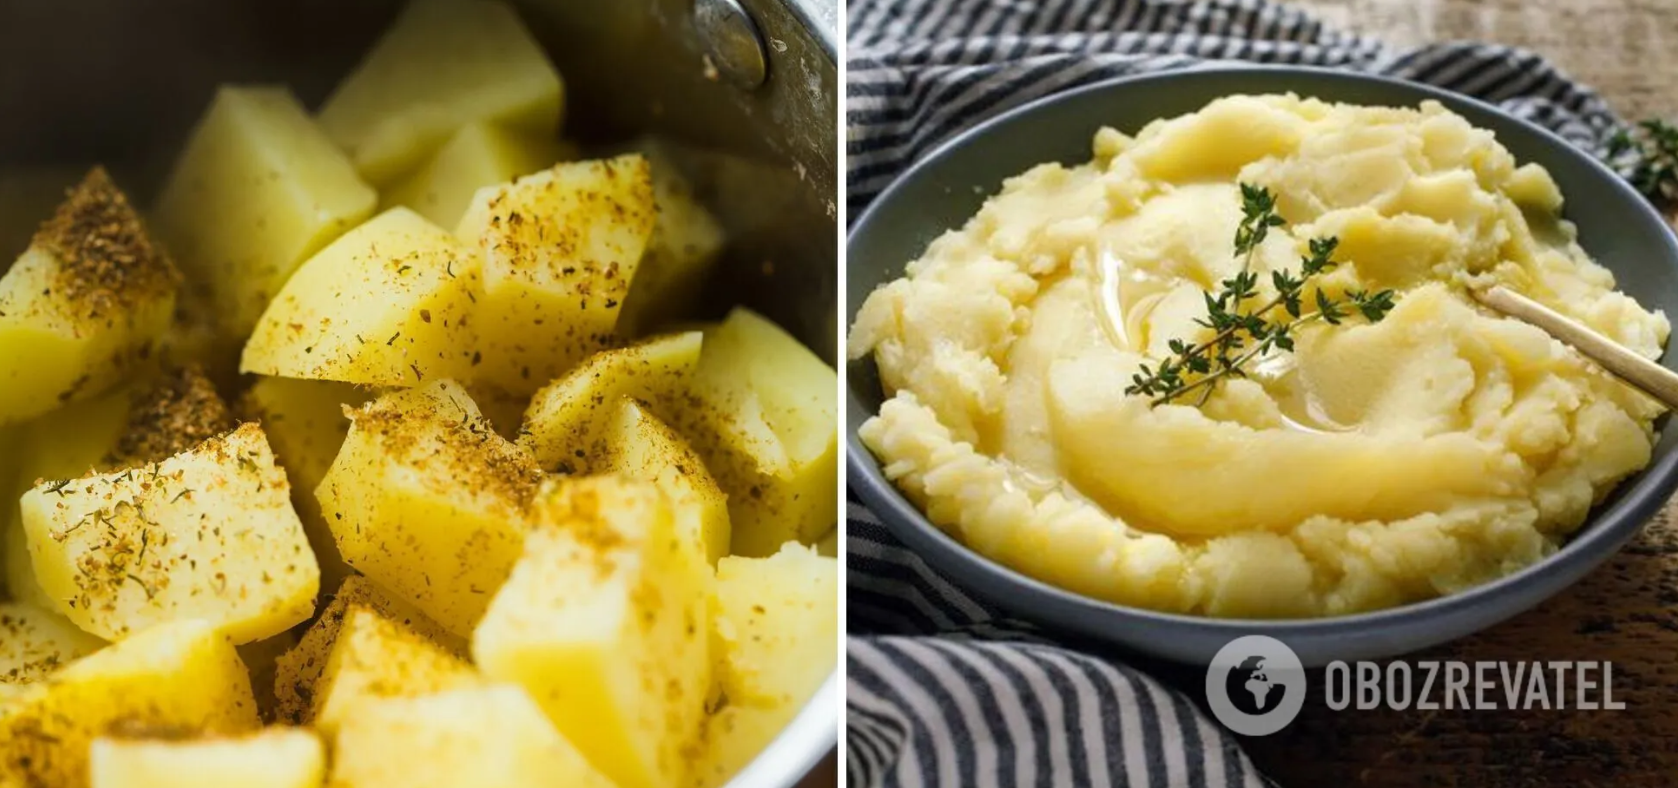 The secrets of making mashed potatoes